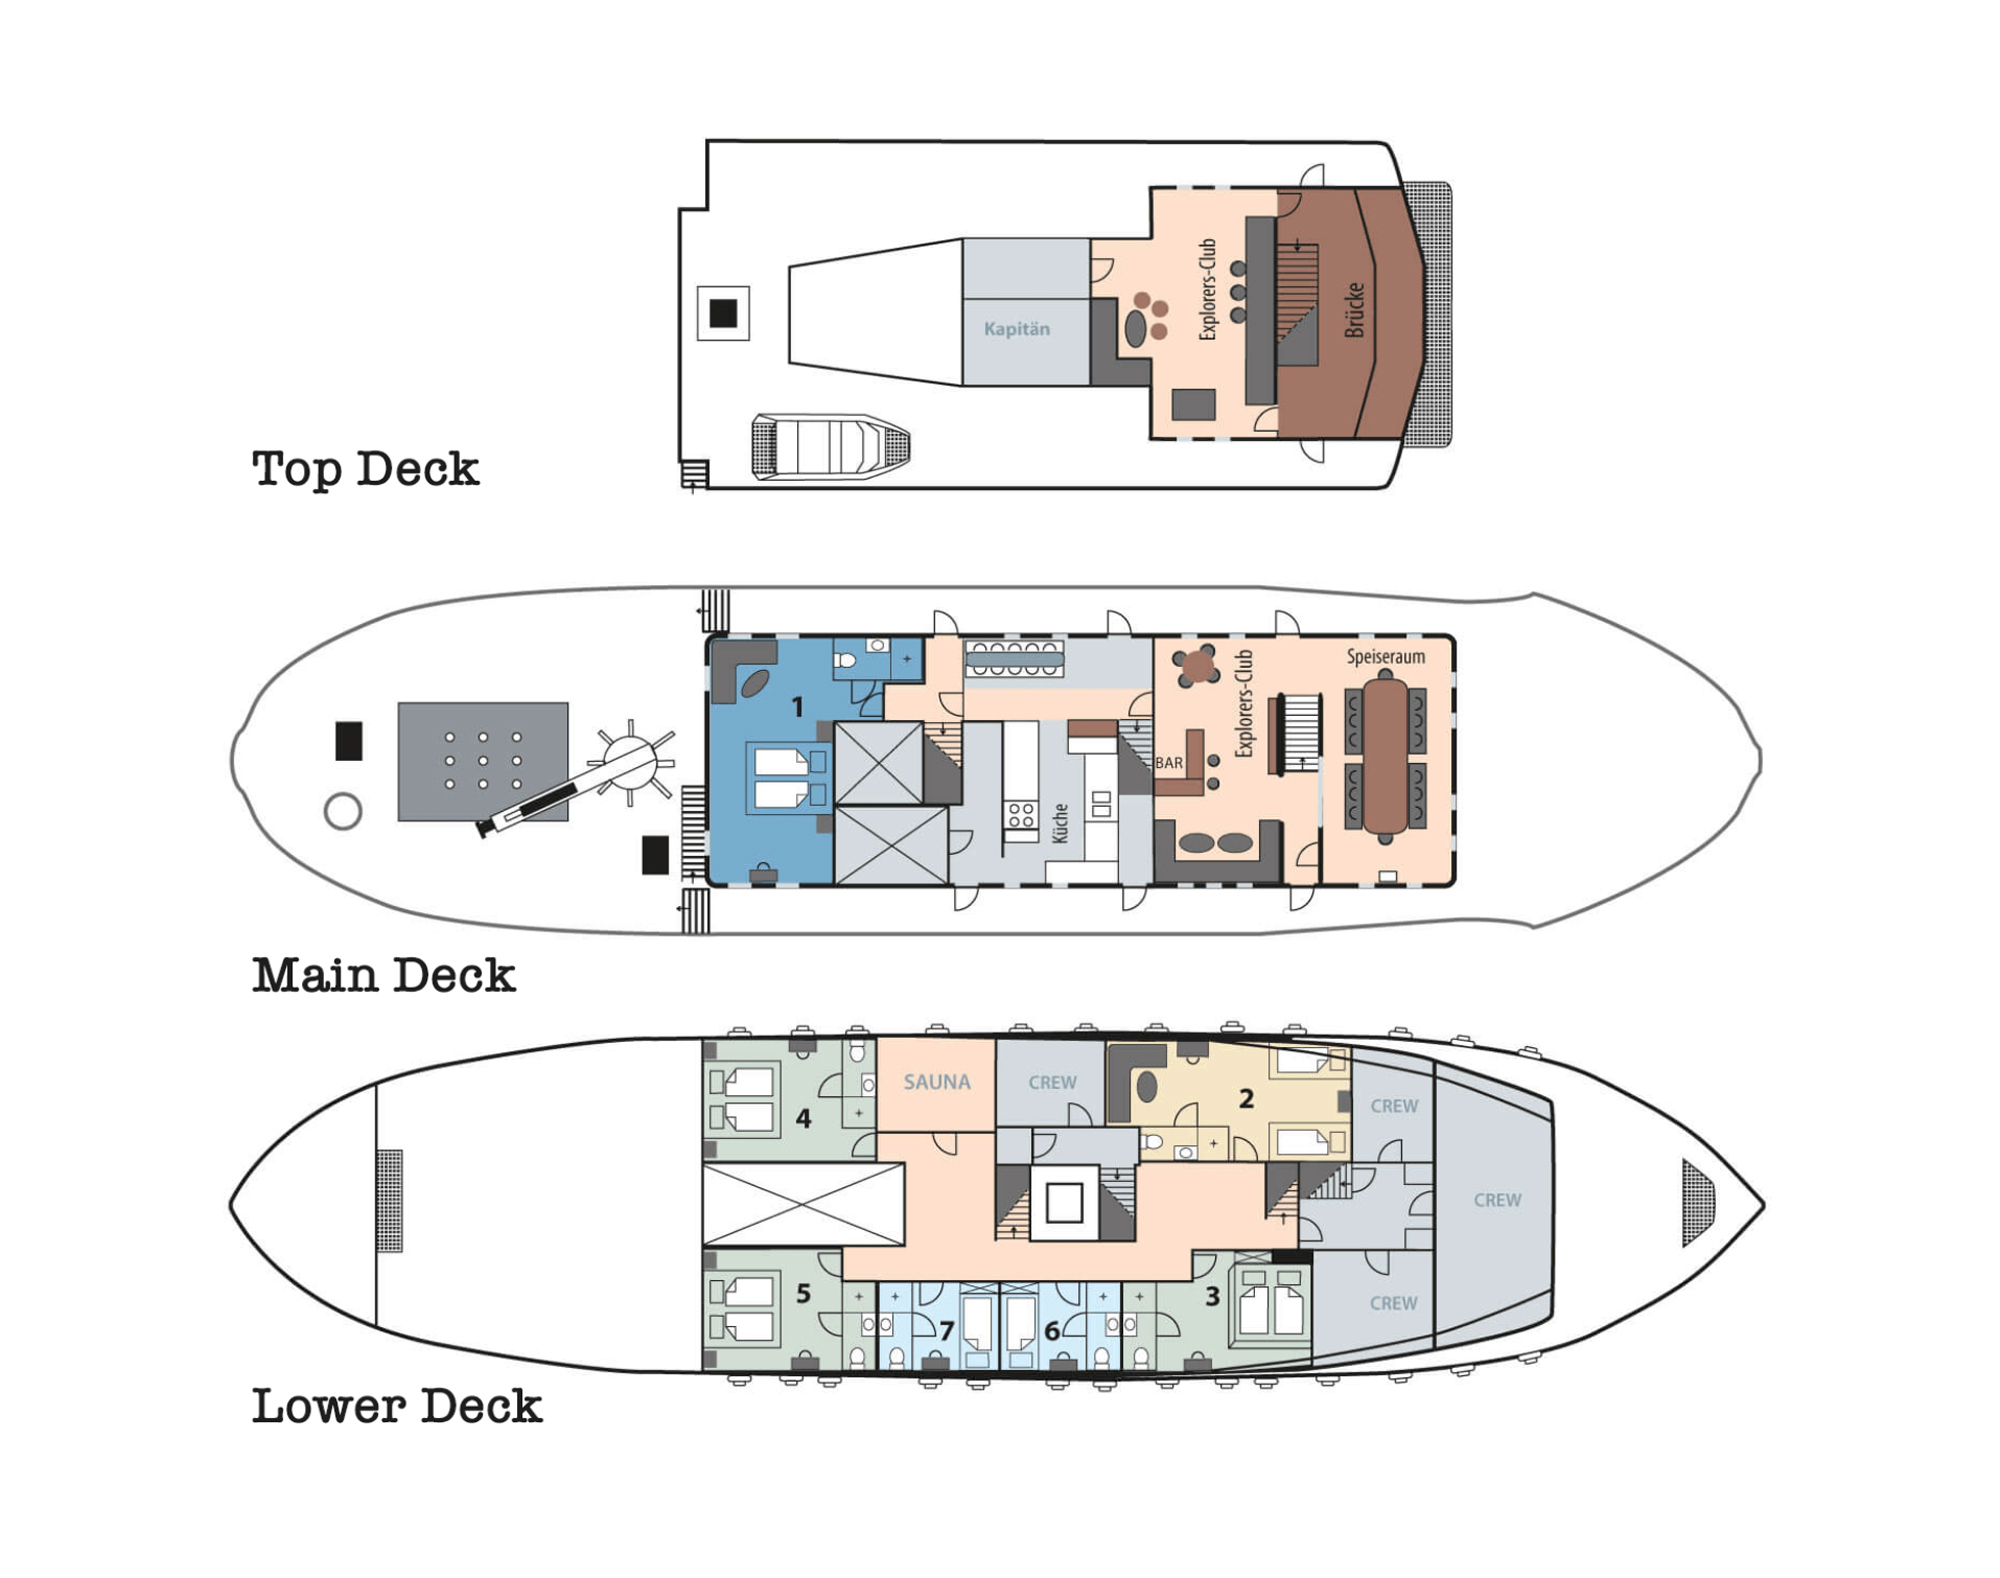 The deck plan